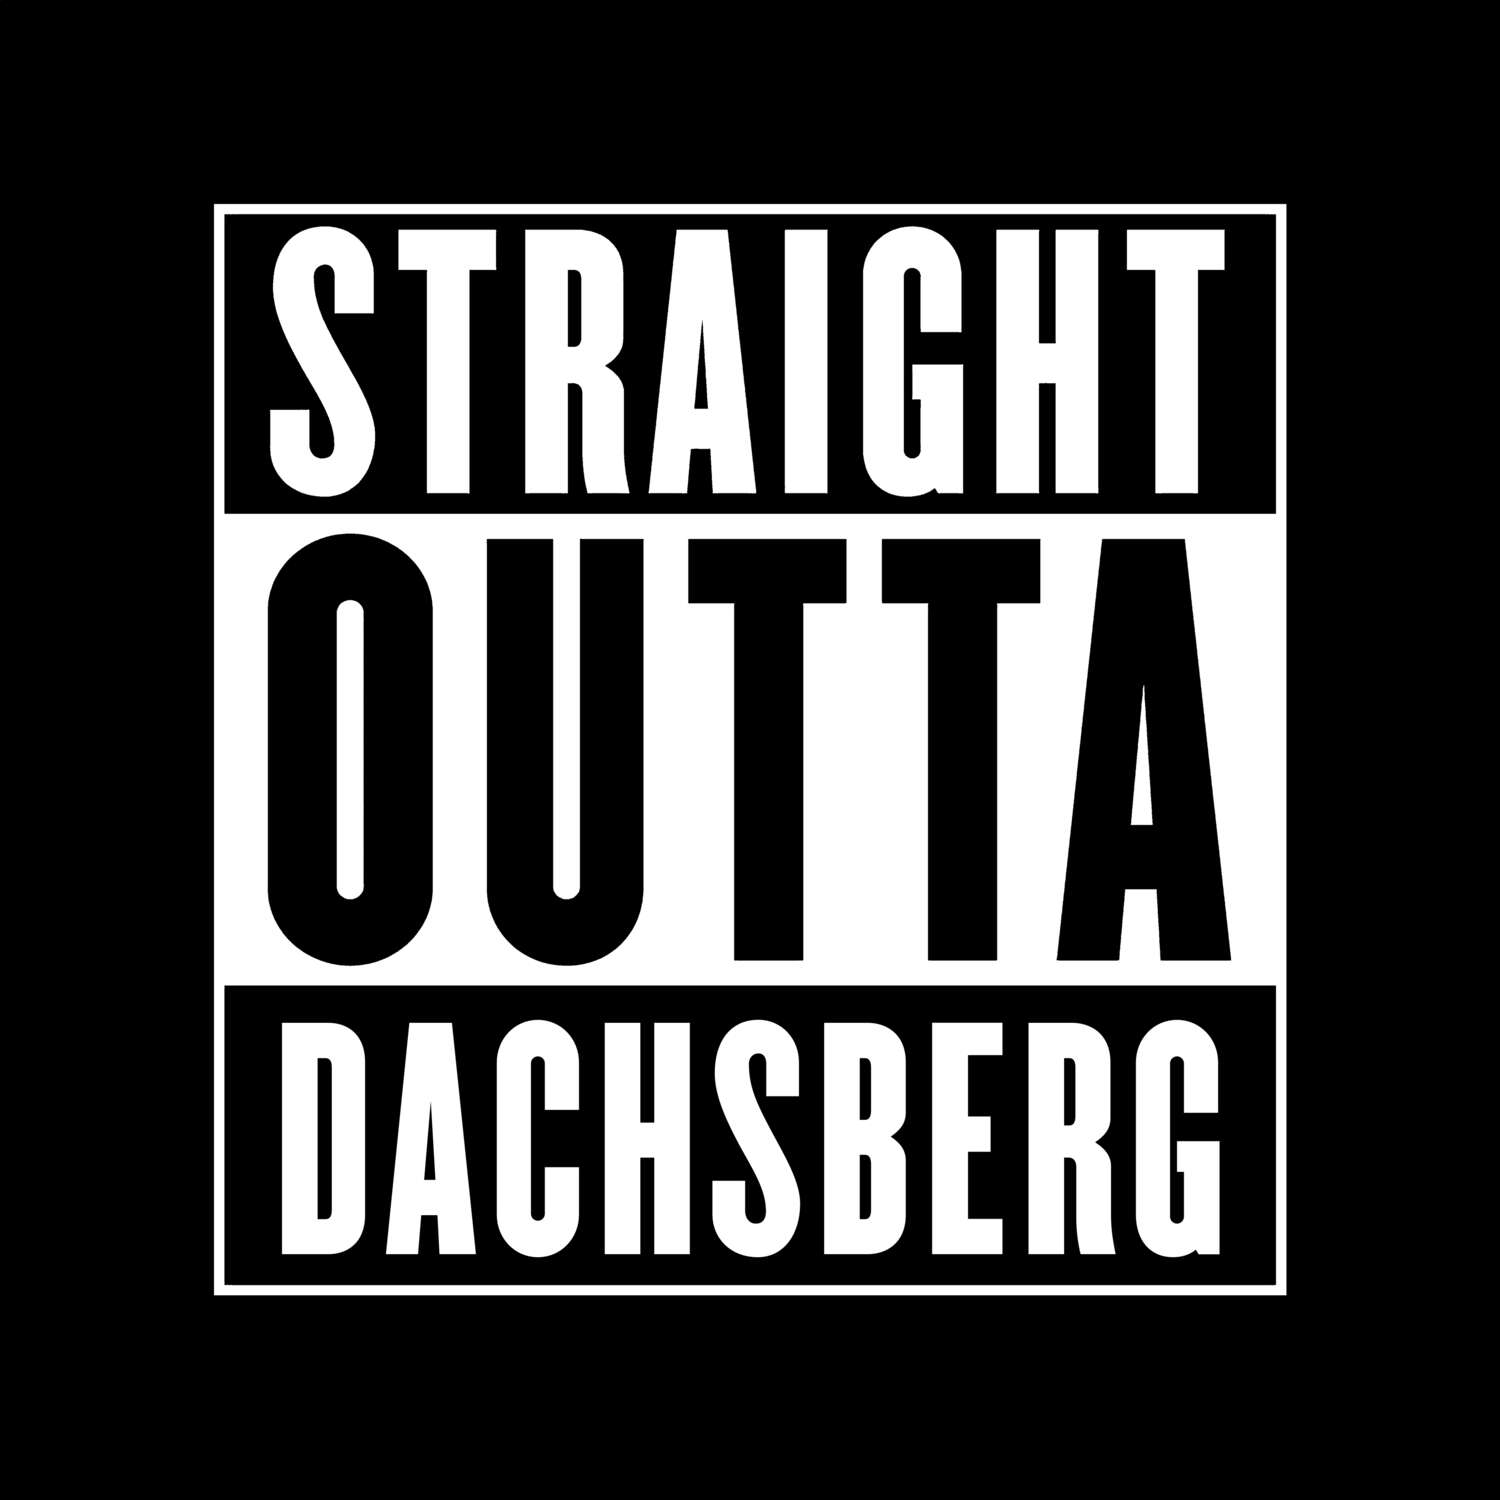 Dachsberg T-Shirt »Straight Outta«